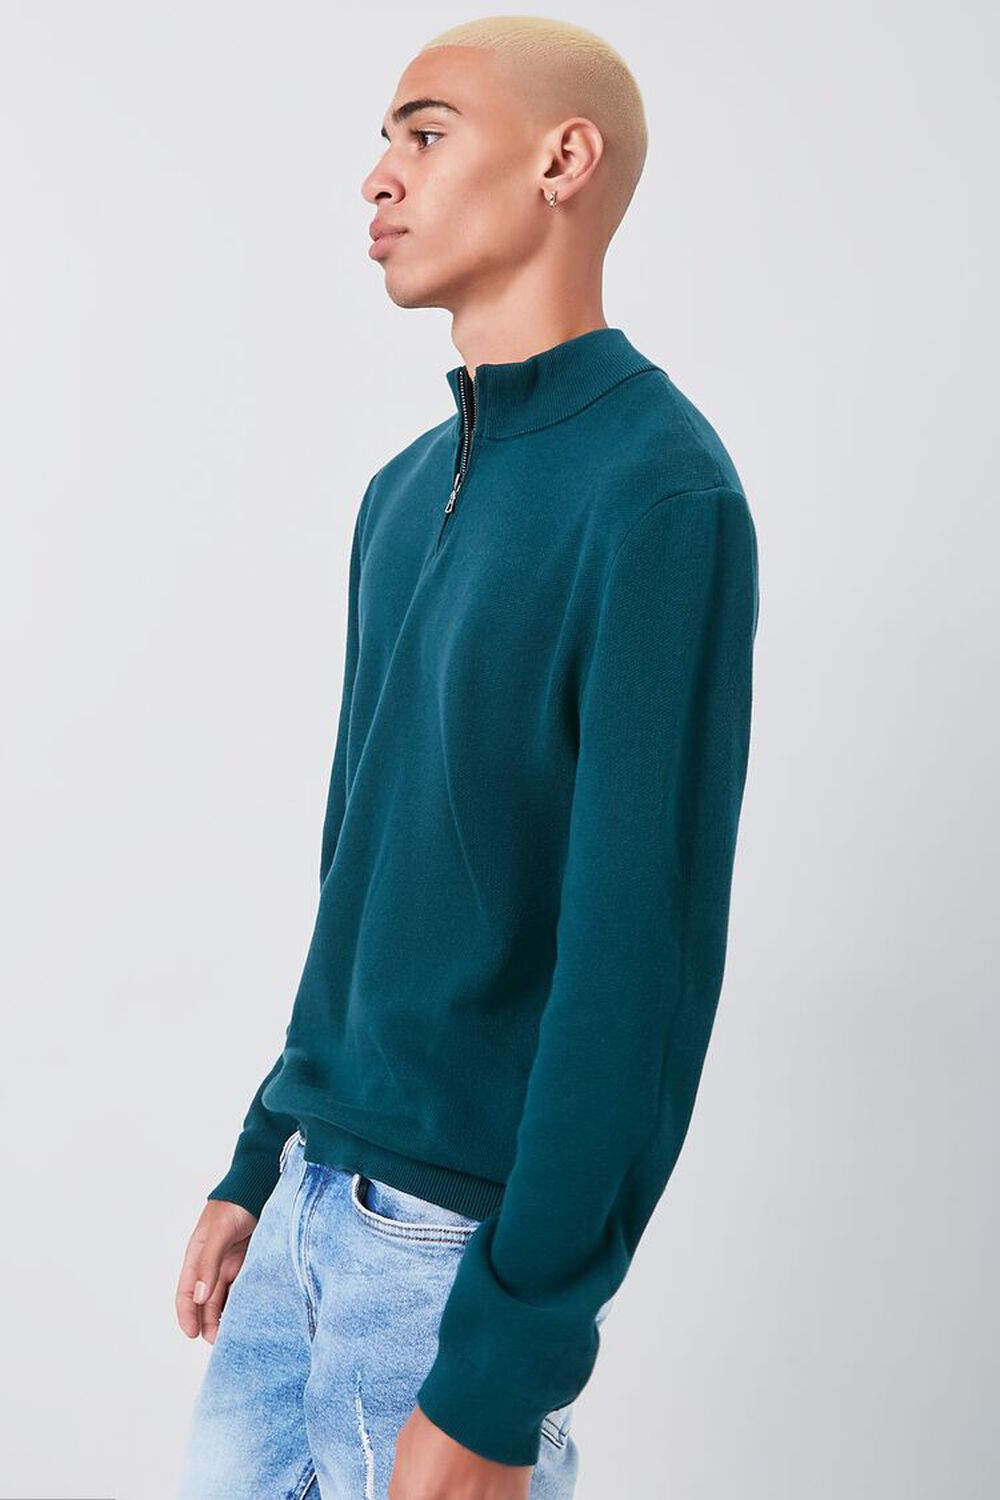 GREEN Marled Knit Half-Zip Sweater, image 2